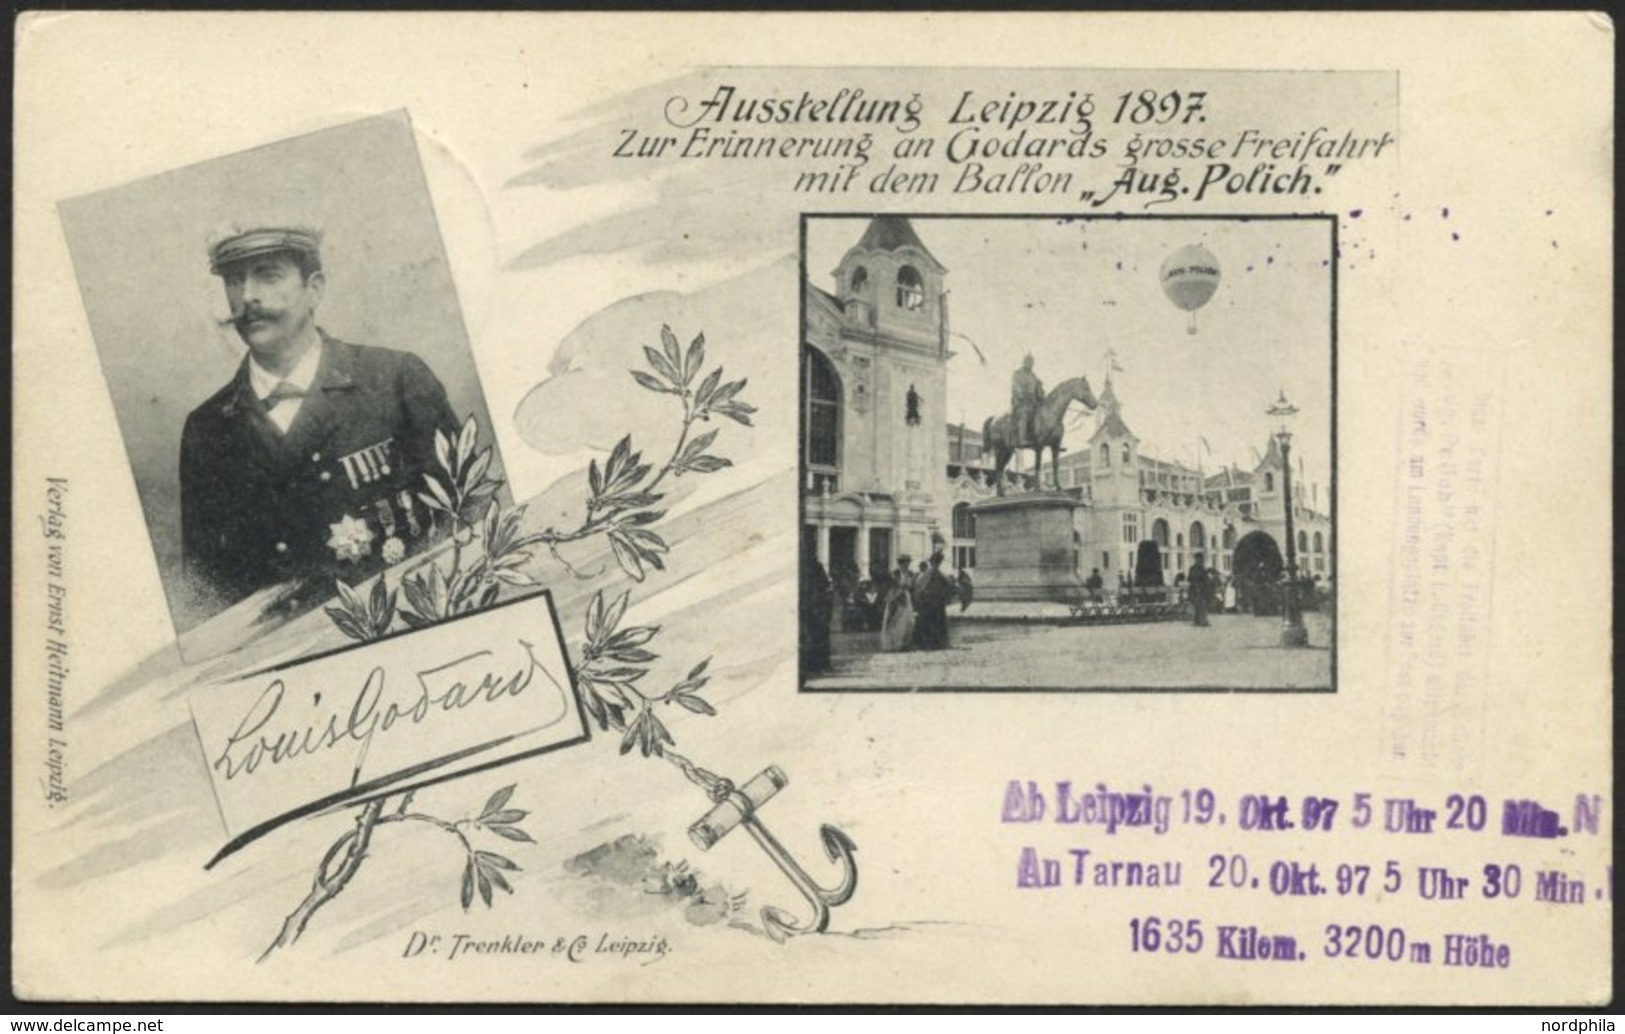 BALLON-FAHRTEN 1897-1916 19.10.1897, Freifahrt Des Ballons AUG. POLICH Mit Kapitän Louis Godard Am Letzten Ausstellungst - Montgolfier